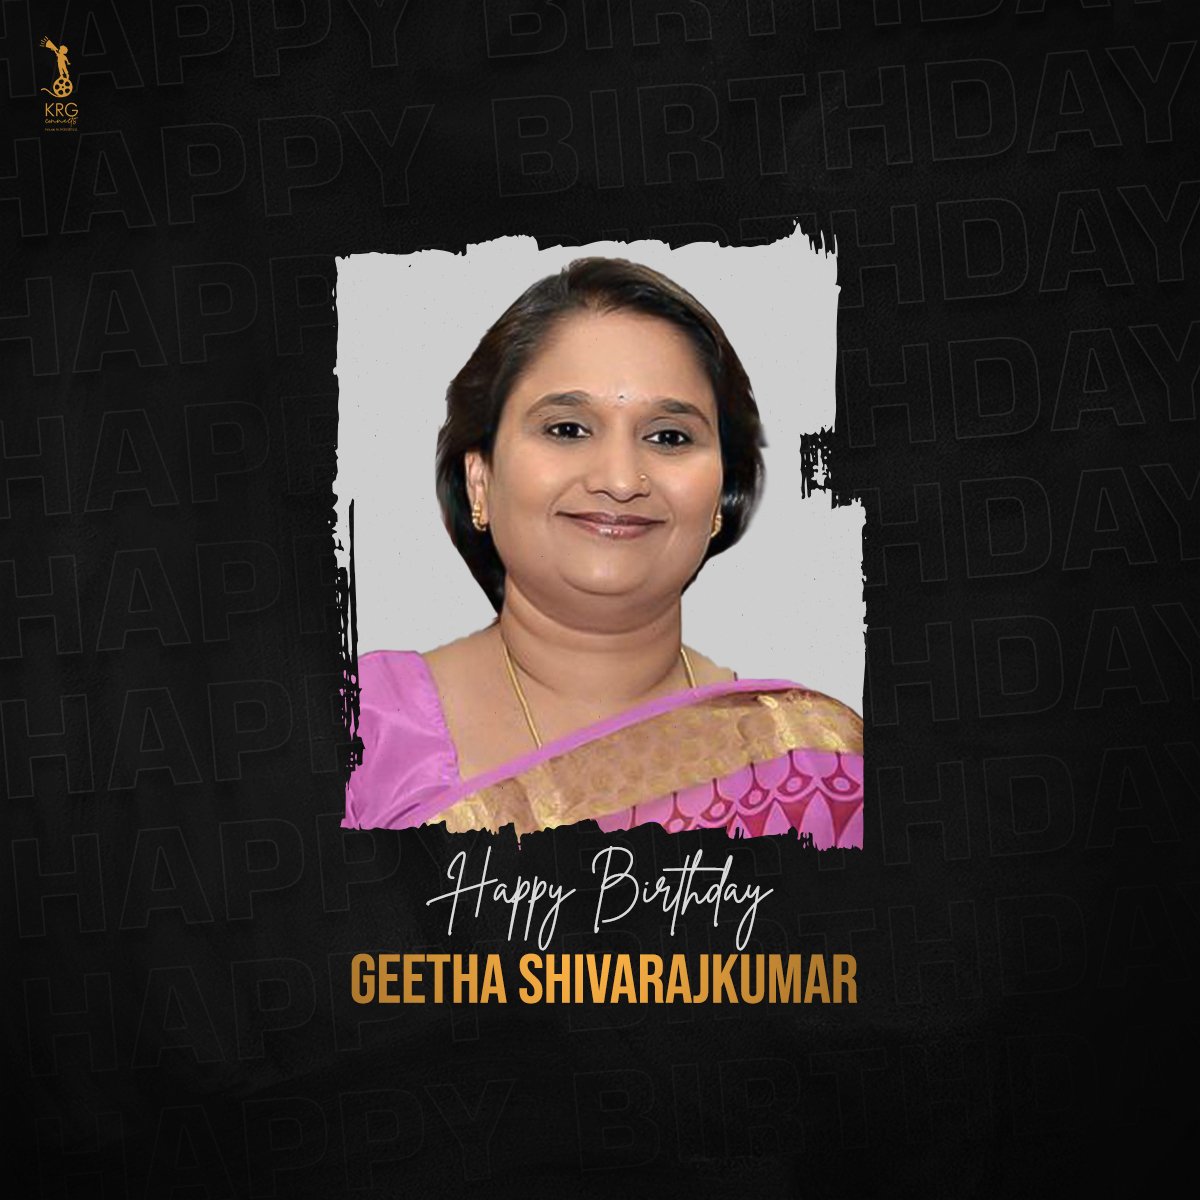 KRG Connects and @KRG_Studios wishes #GeethaShivarajkumar Ma'am A Very Happy Birthday!😊

#HBDGeethaShivarajkumar

@Karthik1423 @yogigraj #Likithareddyneel @NarenDon